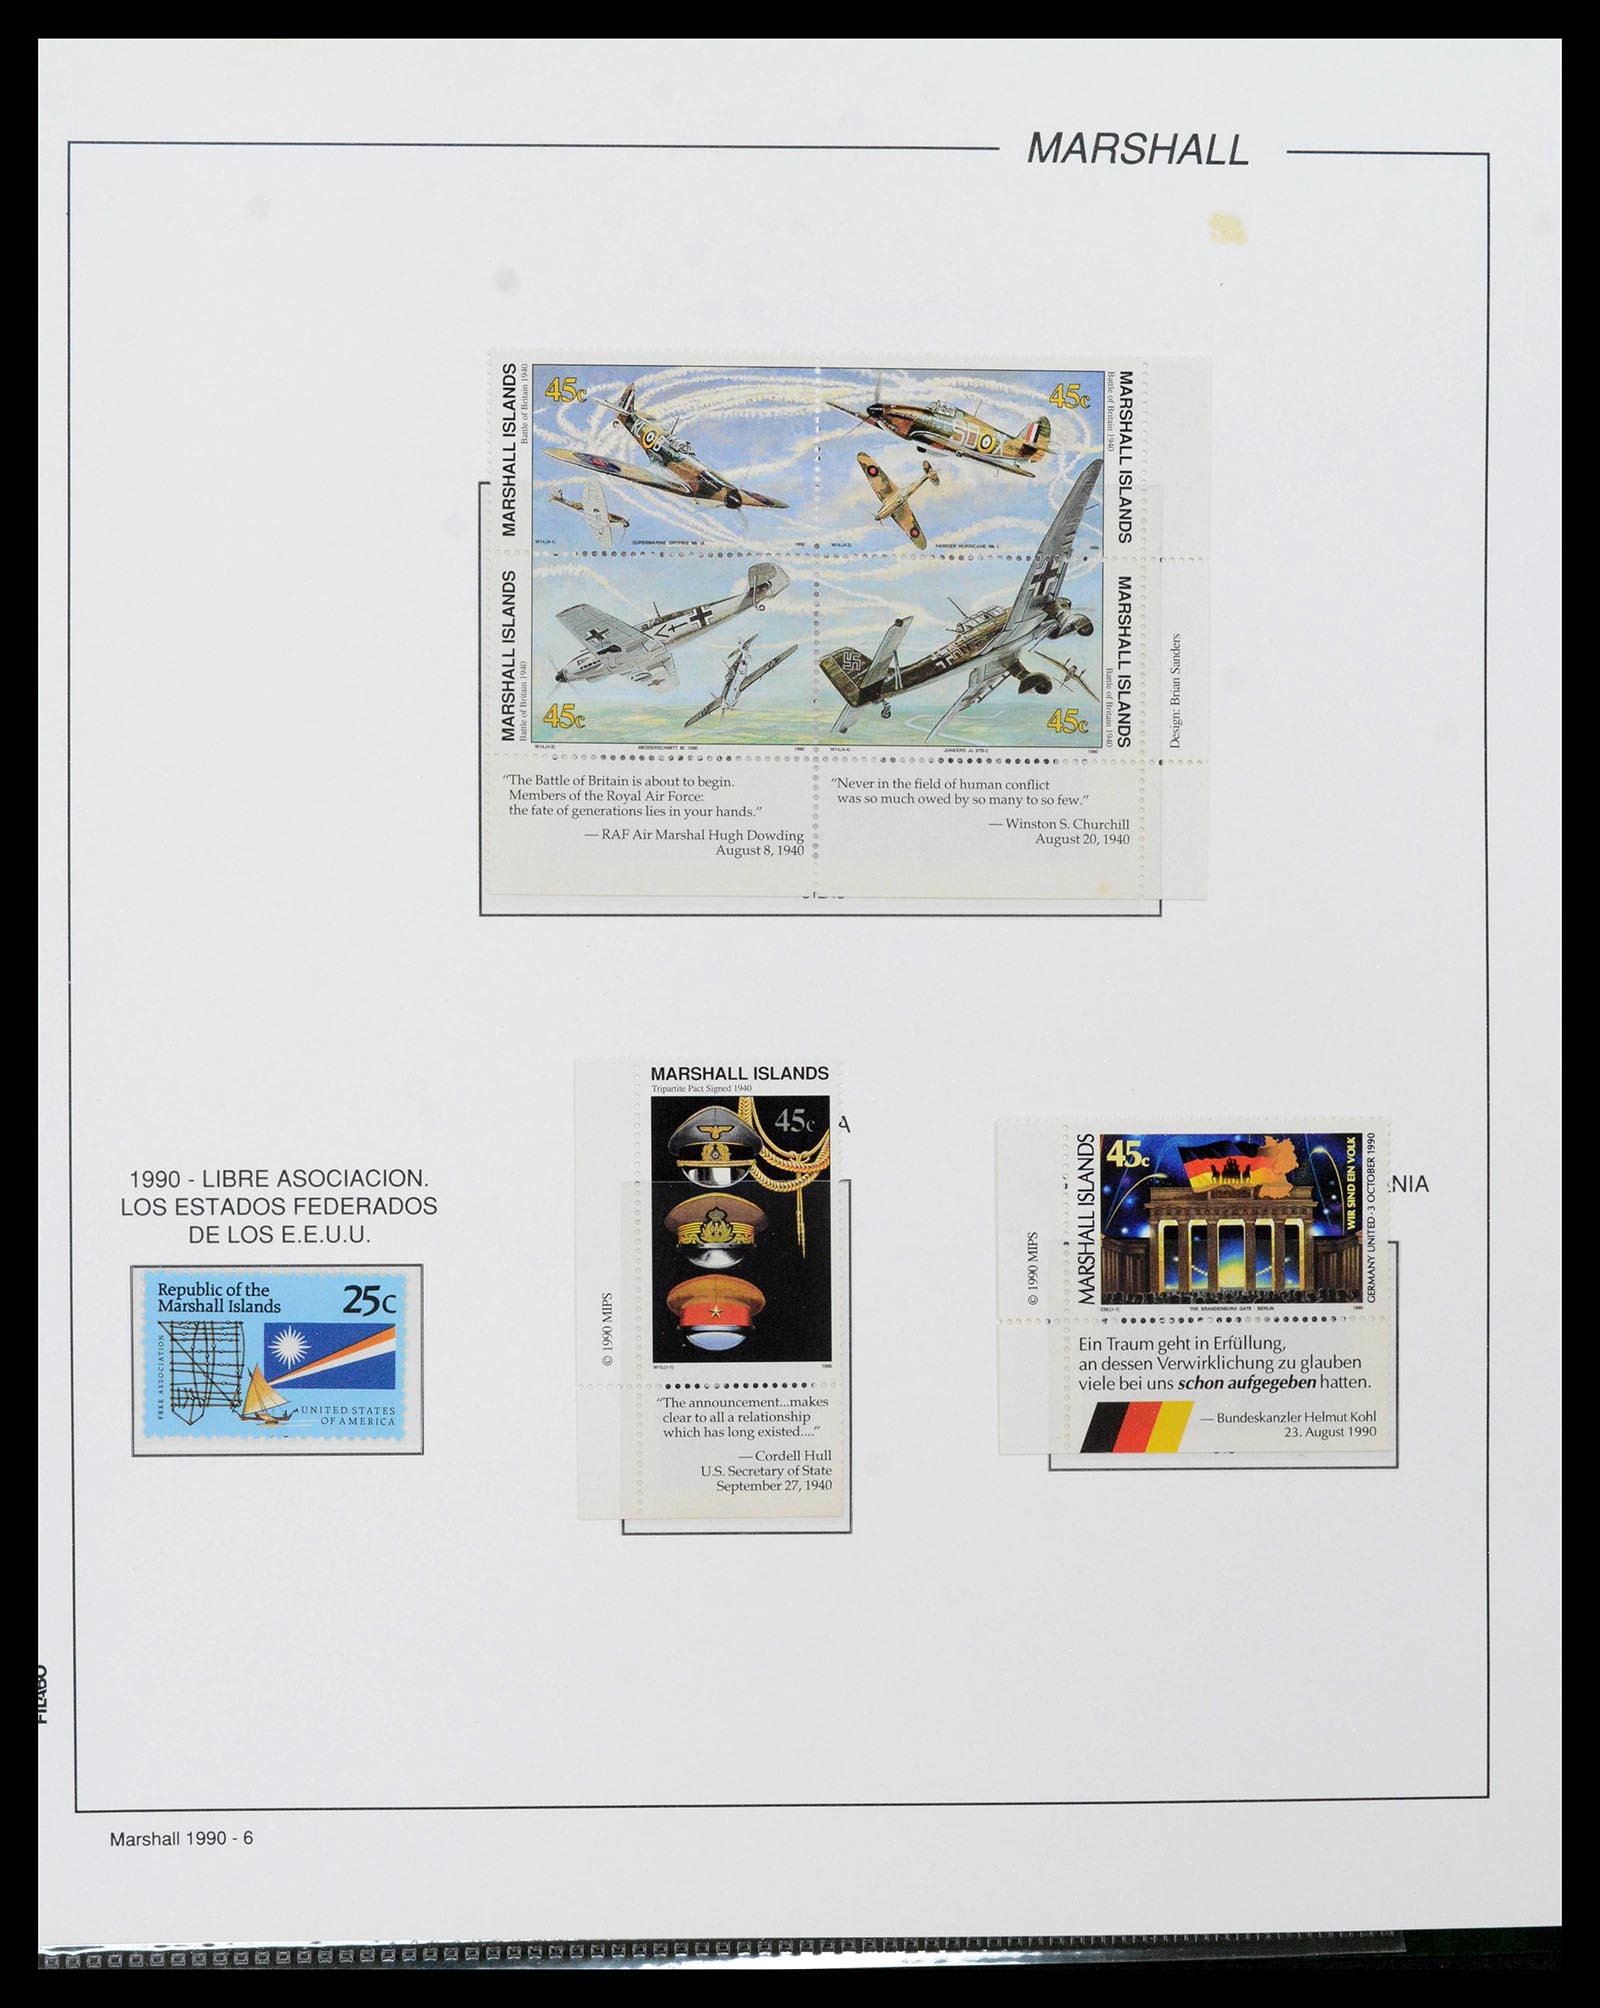 39222 0148 - Stamp collection 39222 Palau, Micronesia and Marshall islands 1980-1995.